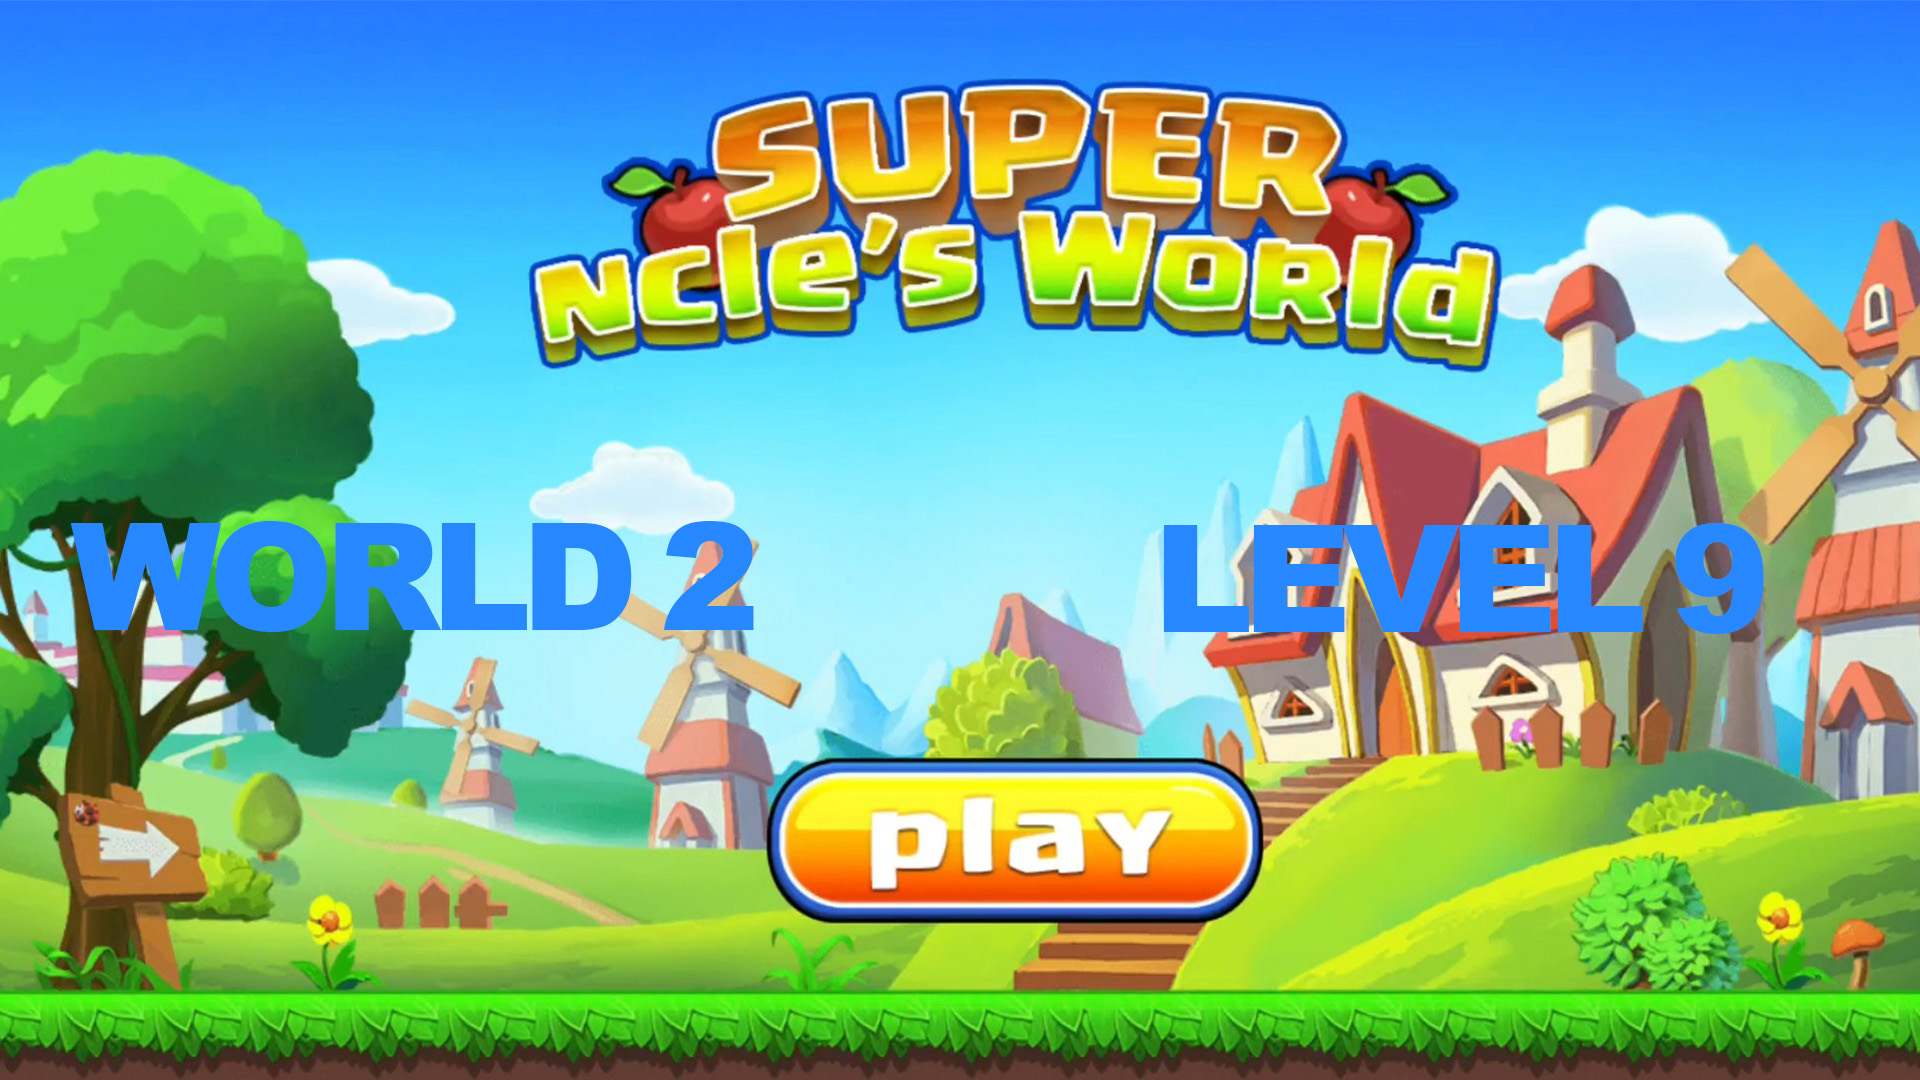 Super ncle's  World 2. levei 9.